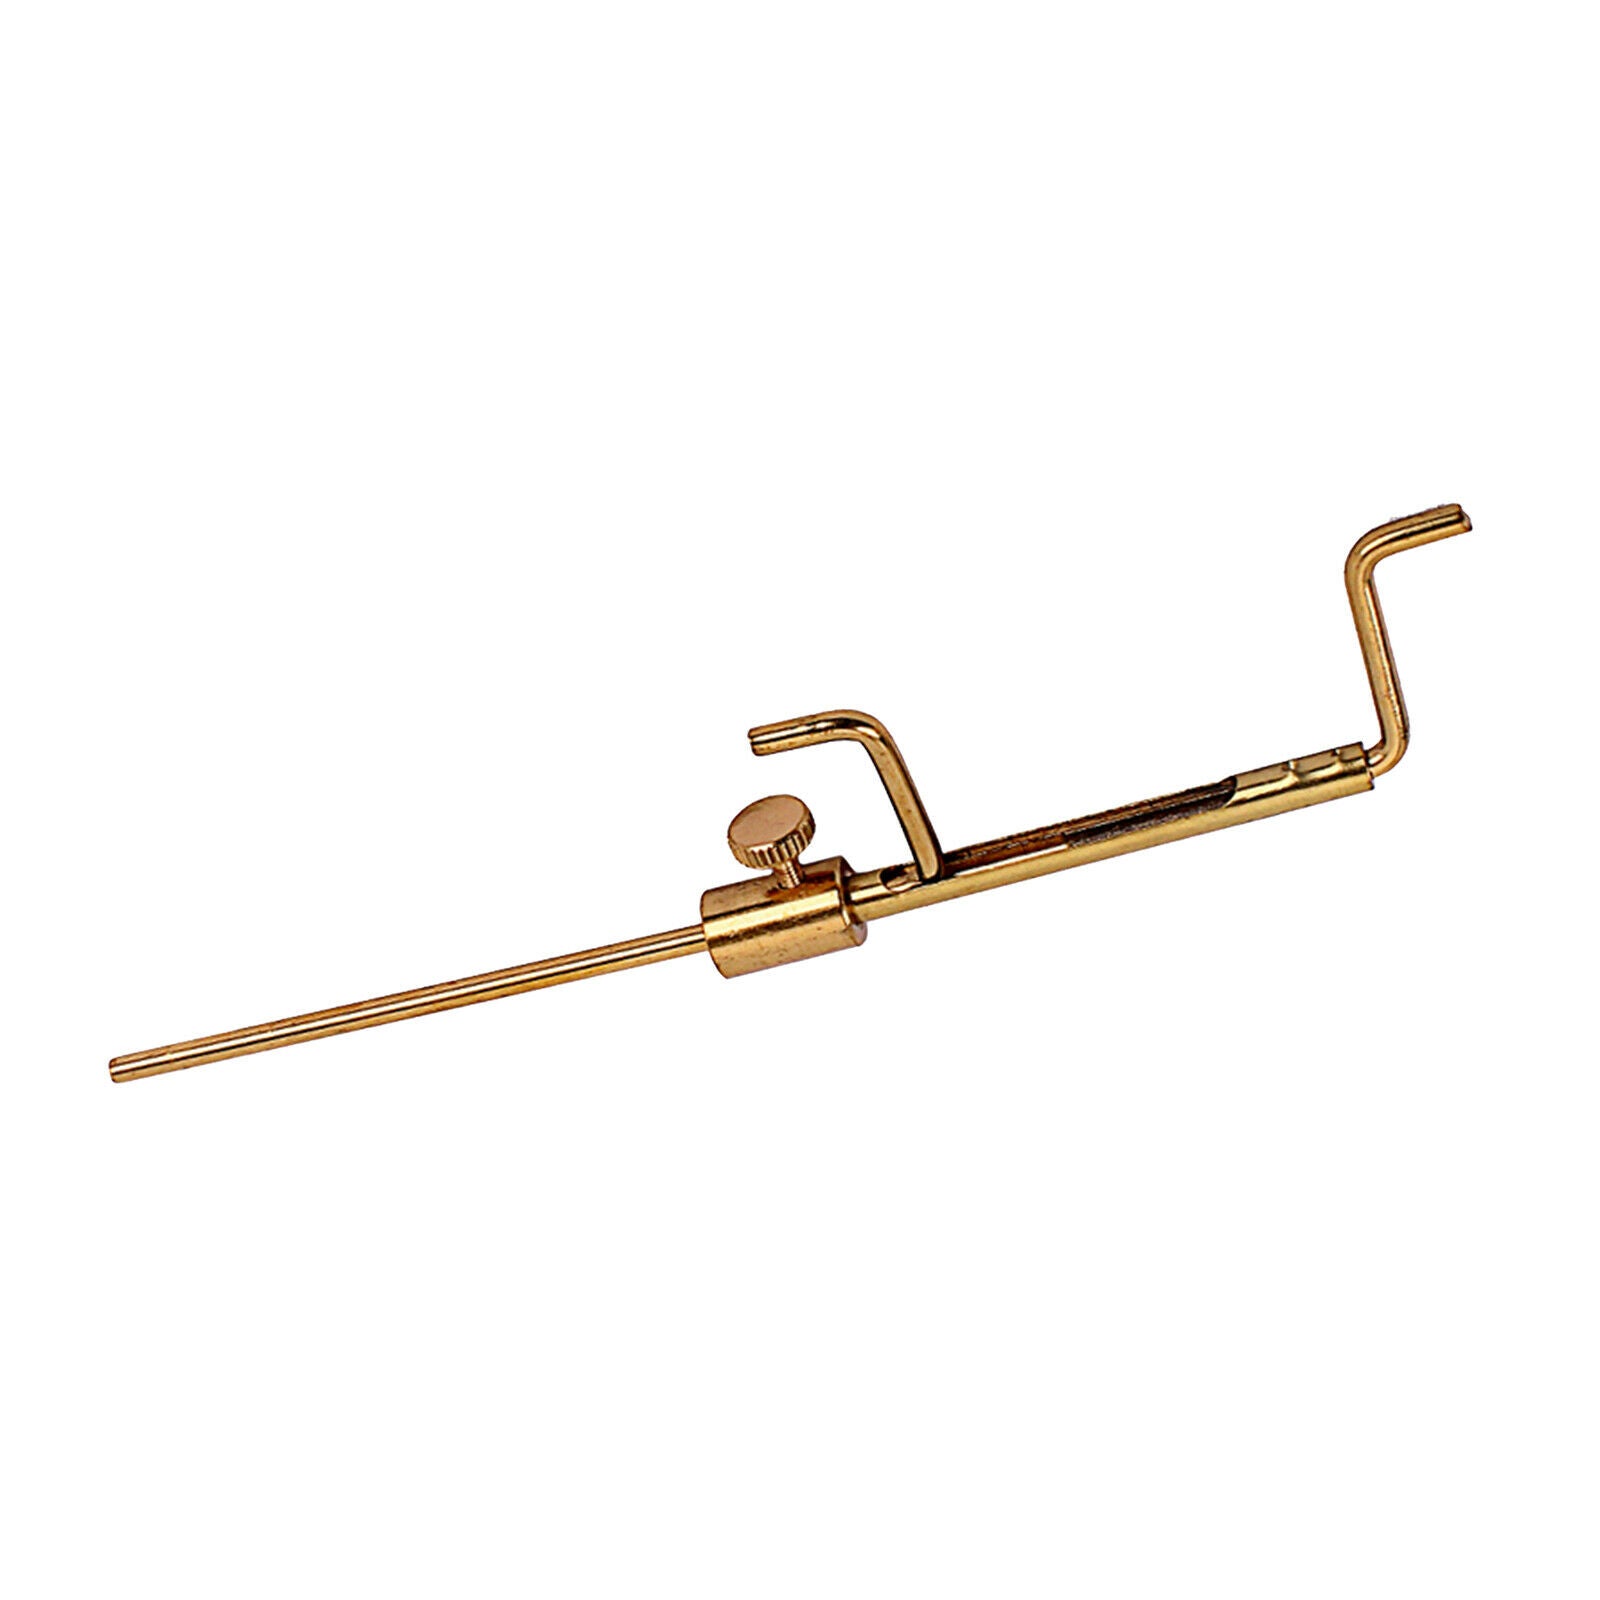 Brass Violins Sound Post Gauge Luthier Repair Install Tools Accessories